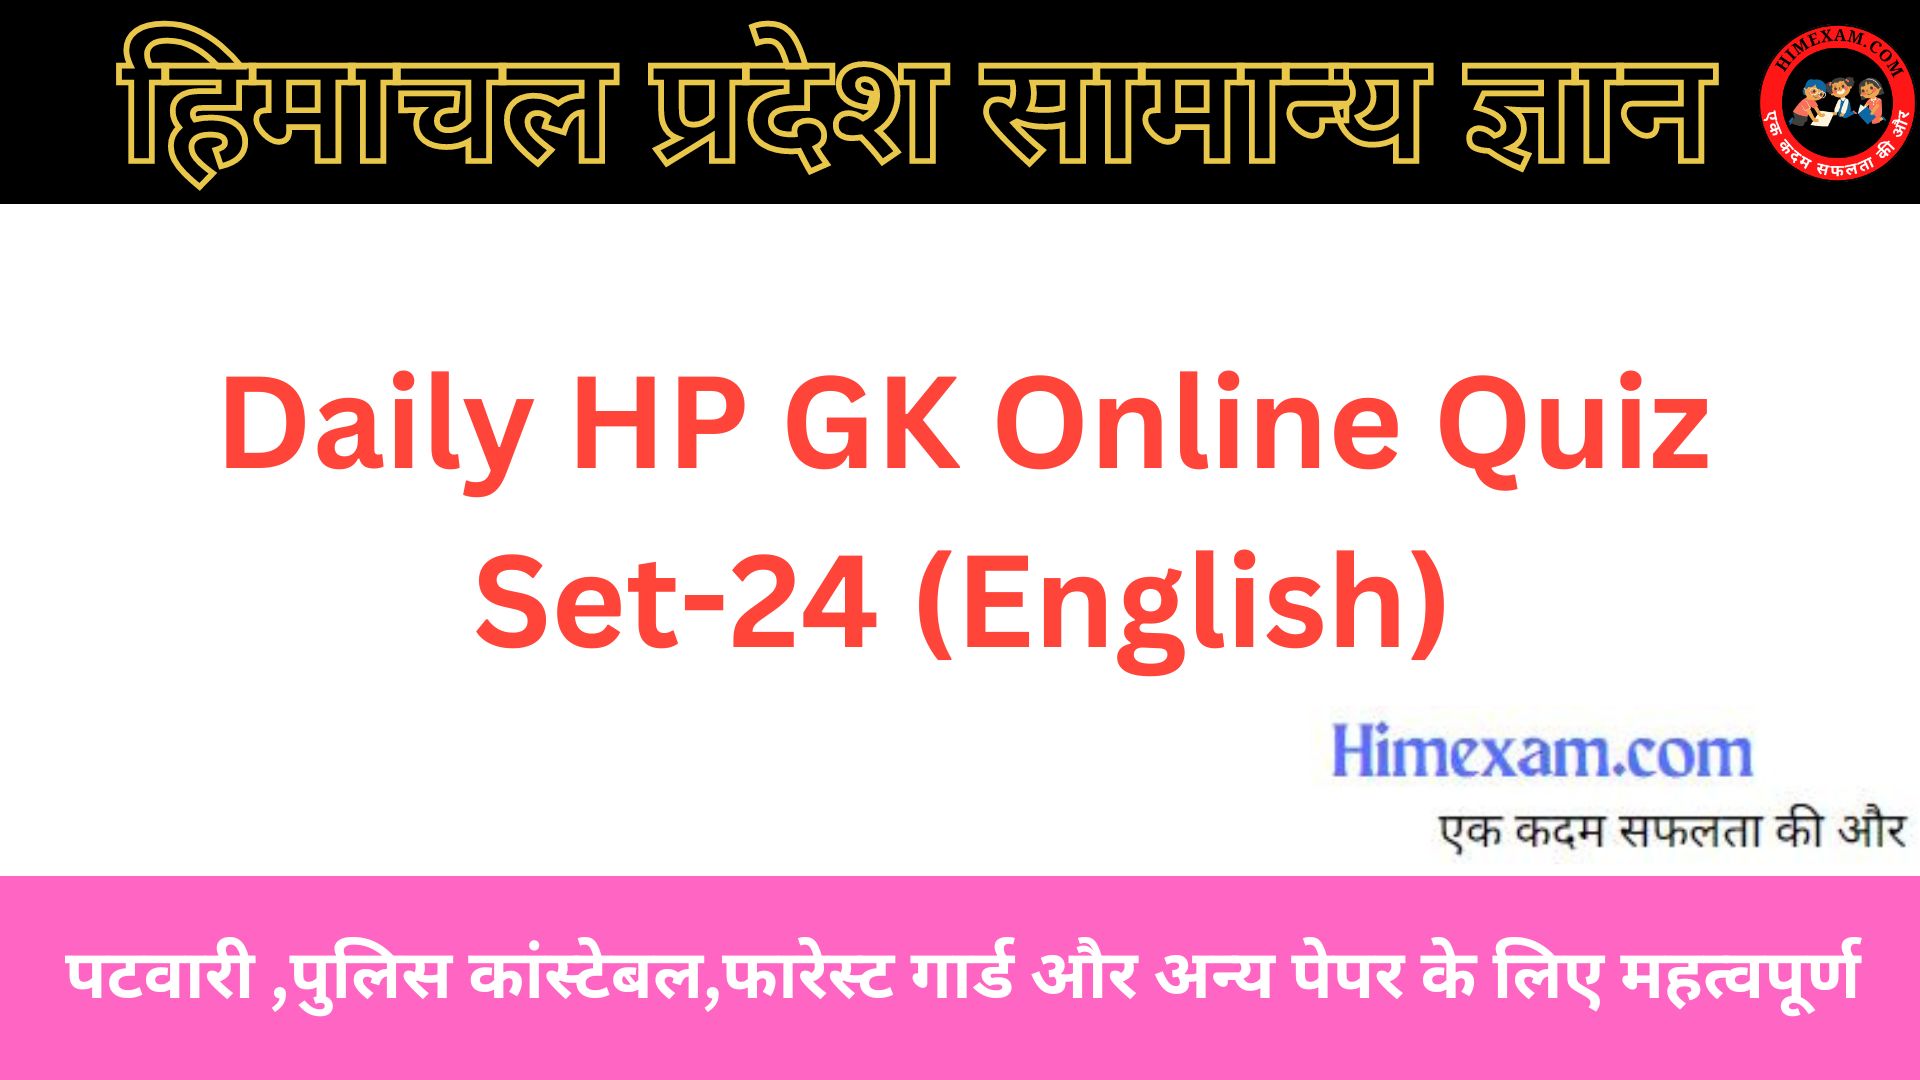 Daily HP GK Online Quiz Set-24 (English)